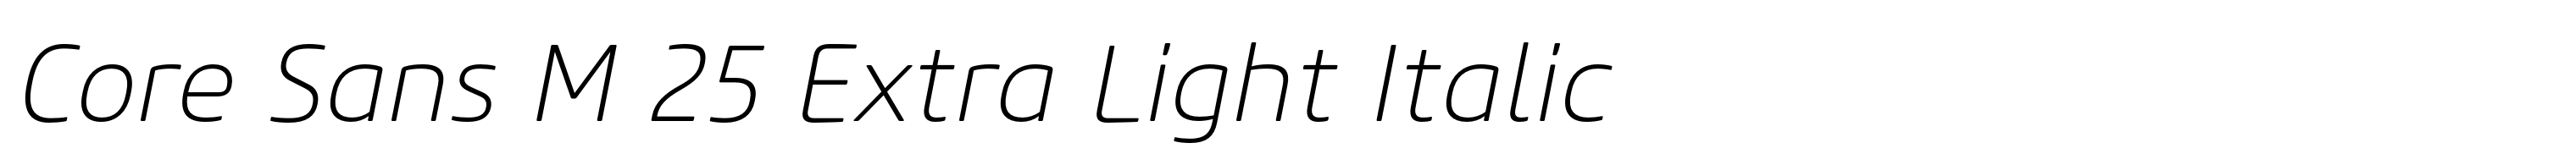 Core Sans M 25 Extra Light Italic